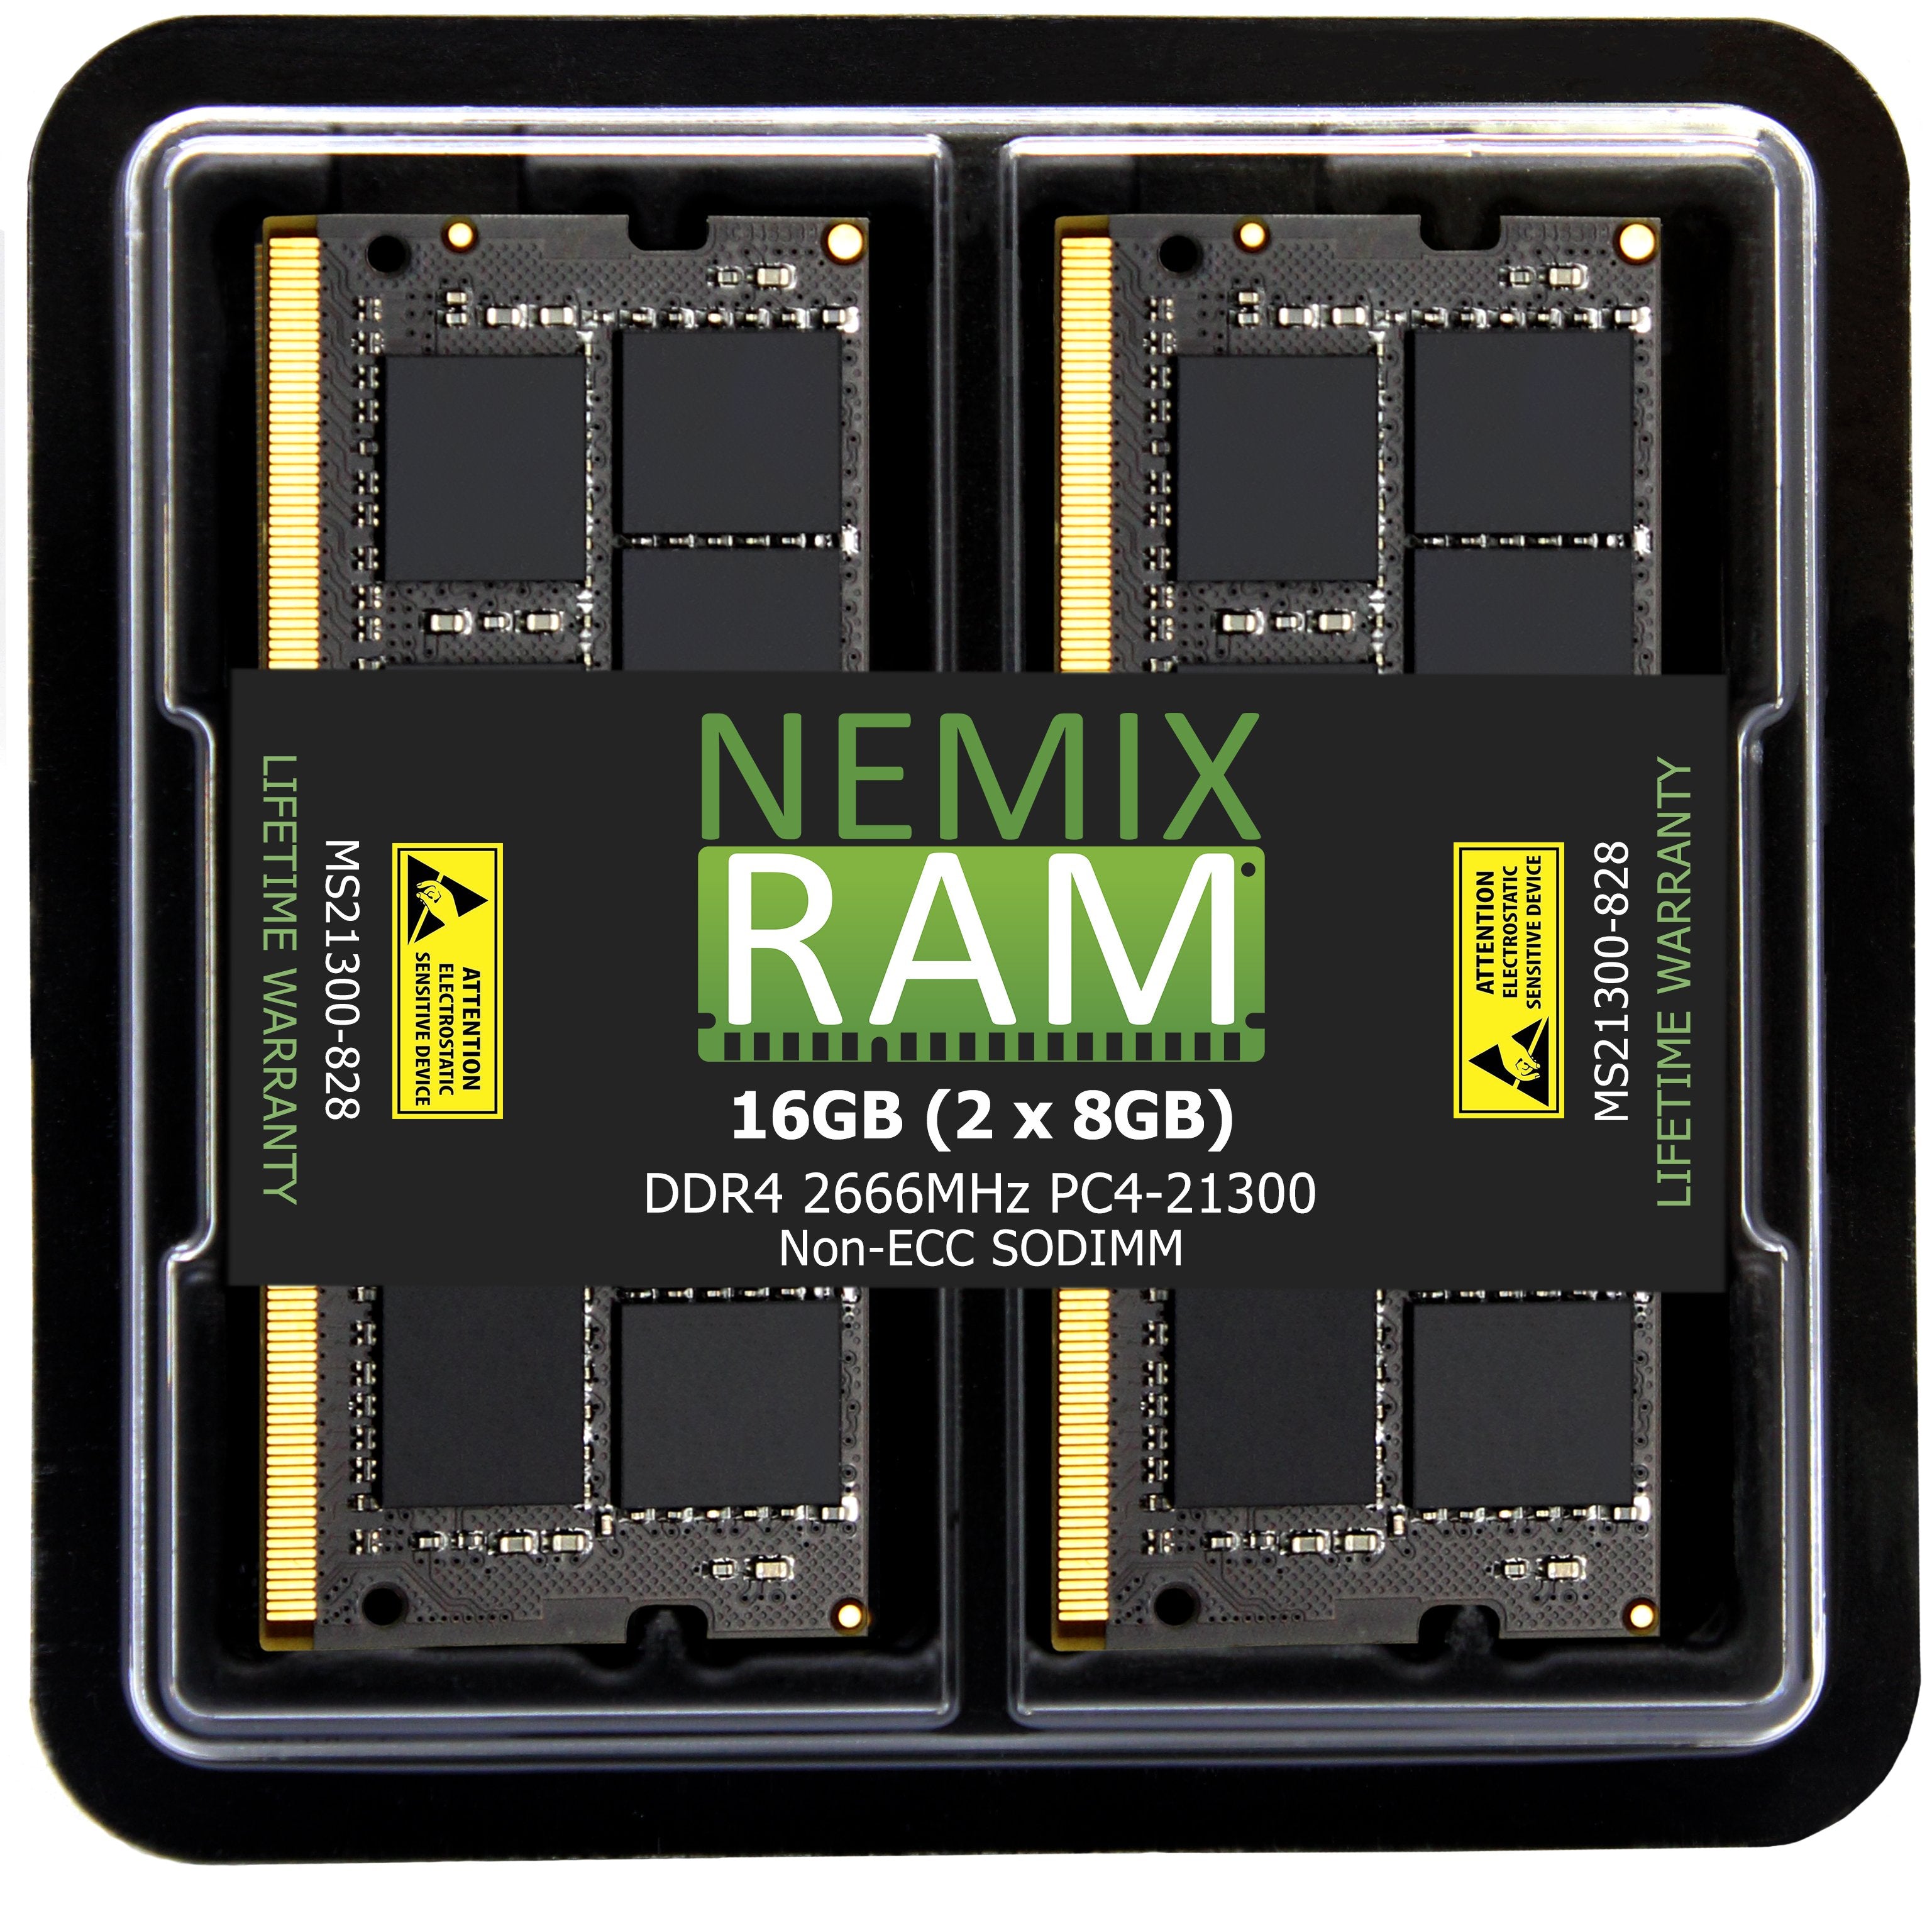 NEMIX RAM Memory Upgrade equivalent to ASUSTOR AS-8GD4 92M11-S8D40 SODIMM Memory Module